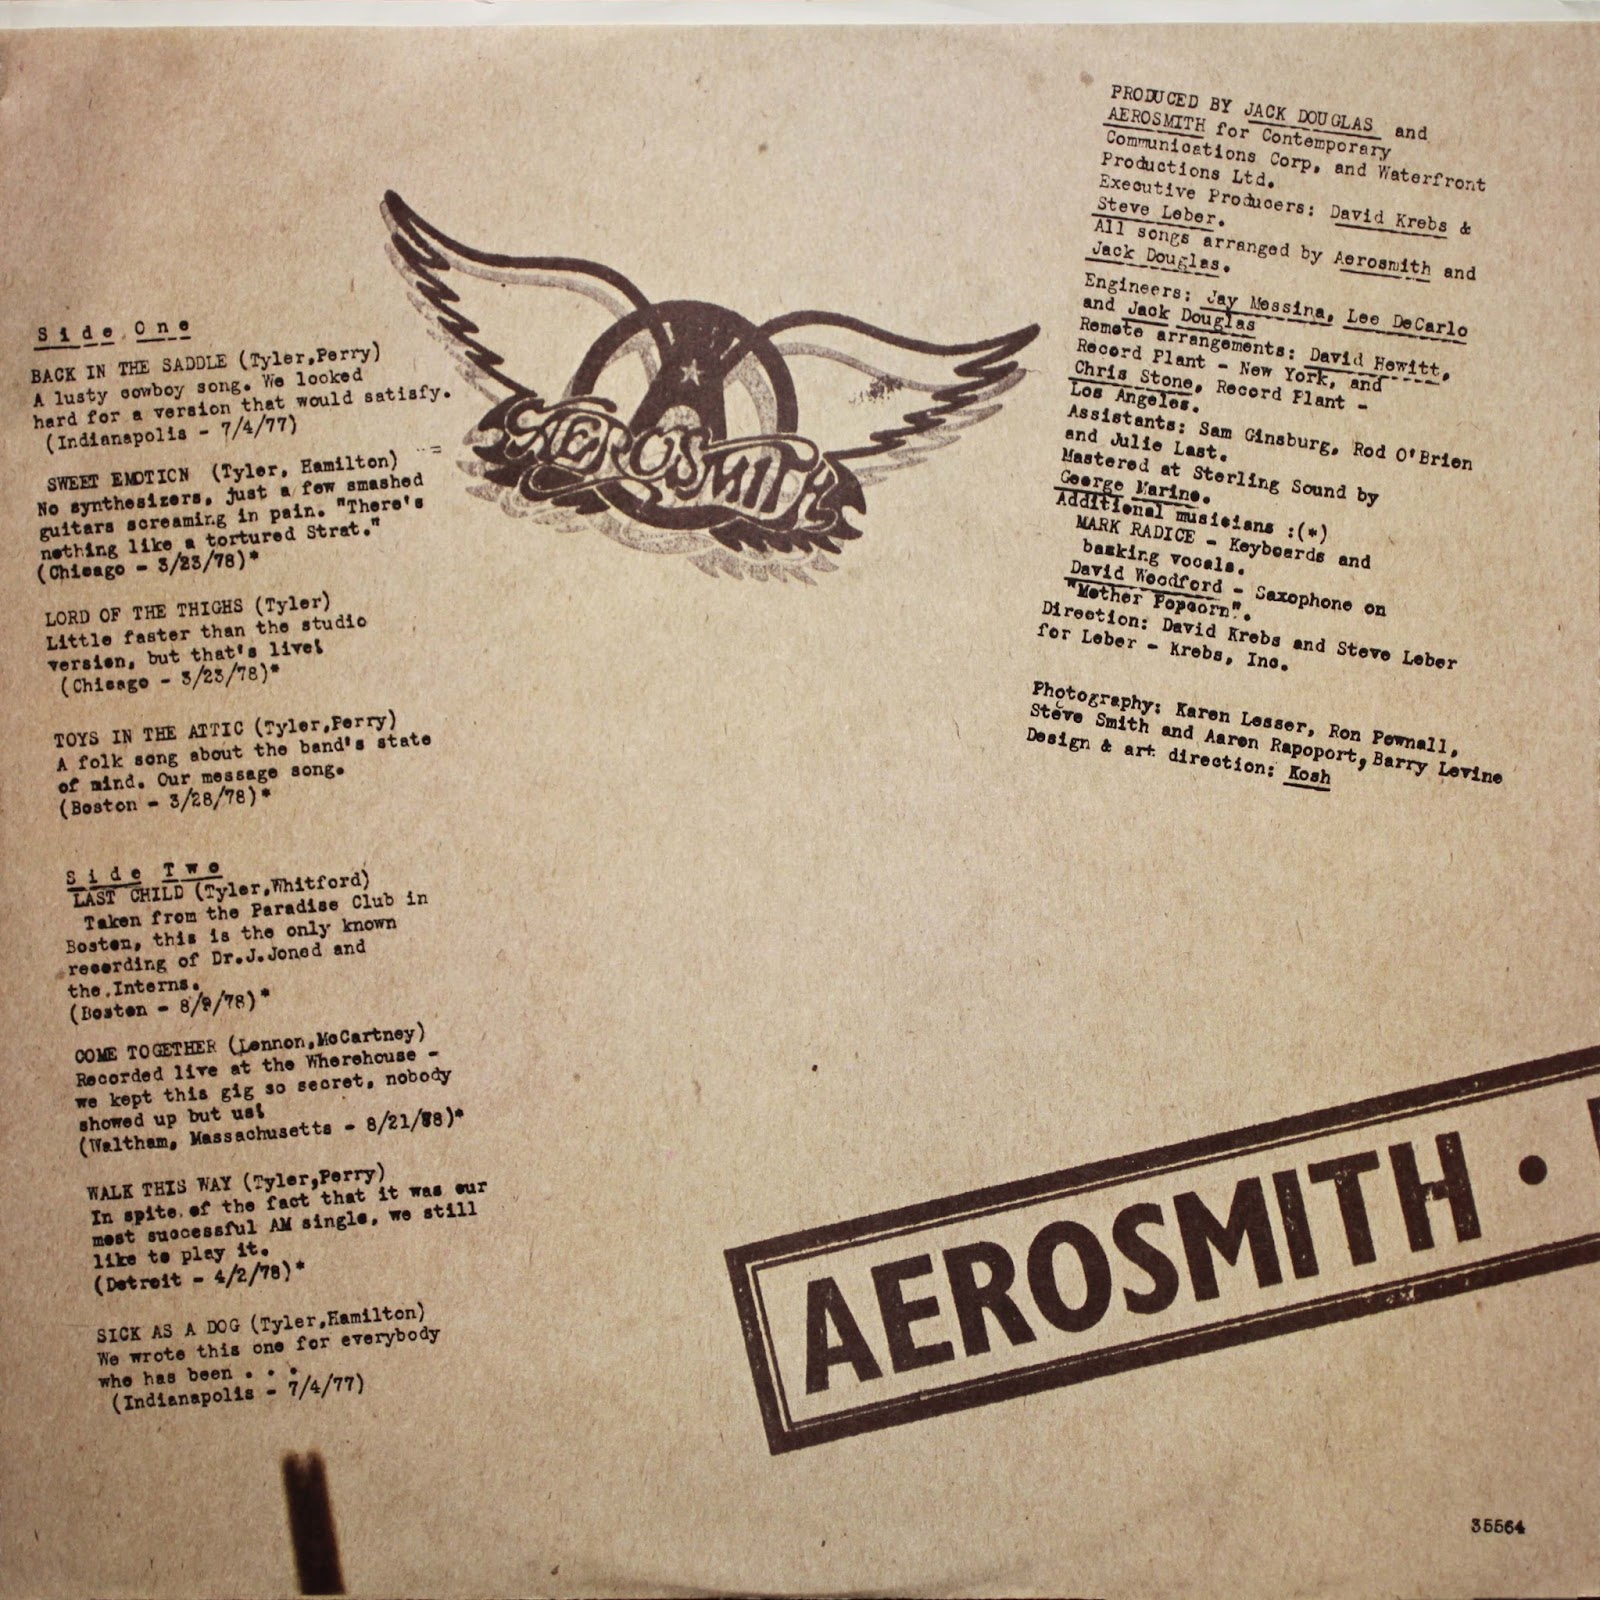 Aerosmith live bootleg album cover-porn galleries